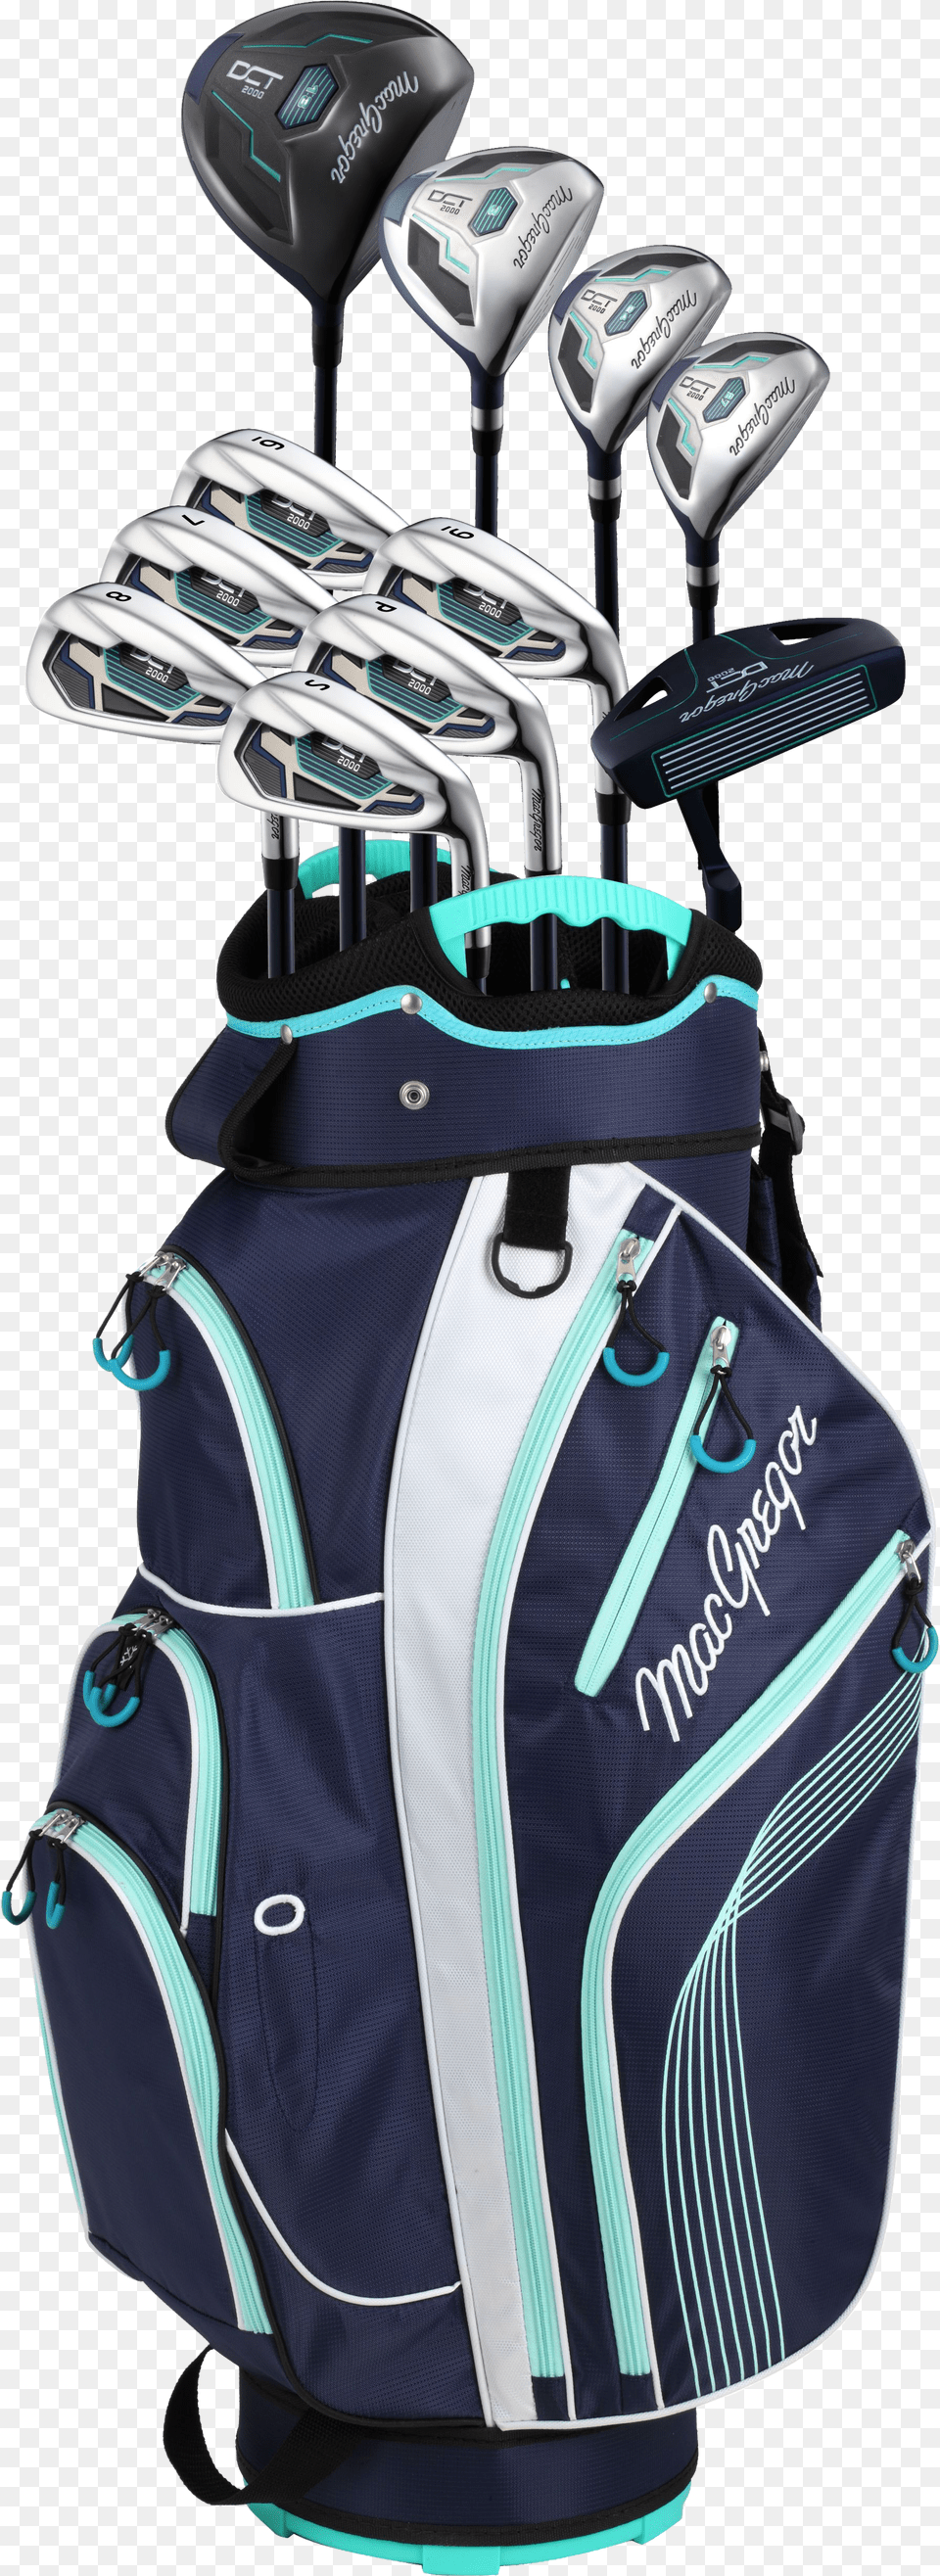 Golf Bag Png